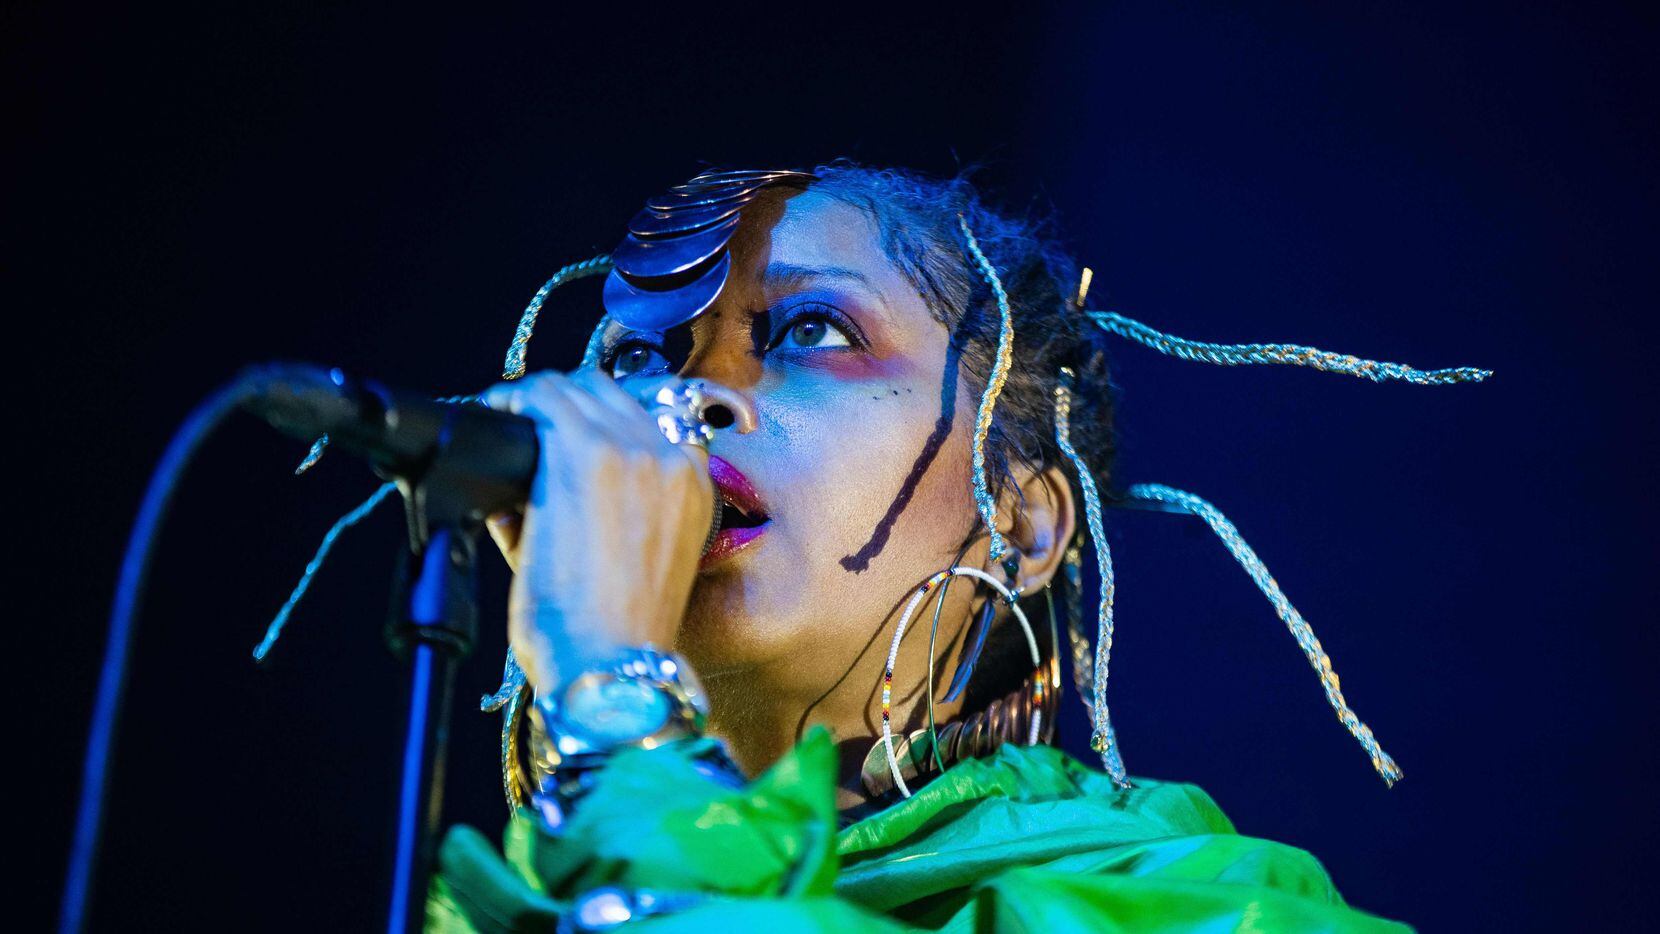 Erykah Badu performs at pop venue 013 in Tilburg, the Netherlands, on Aug. 12, 2019.